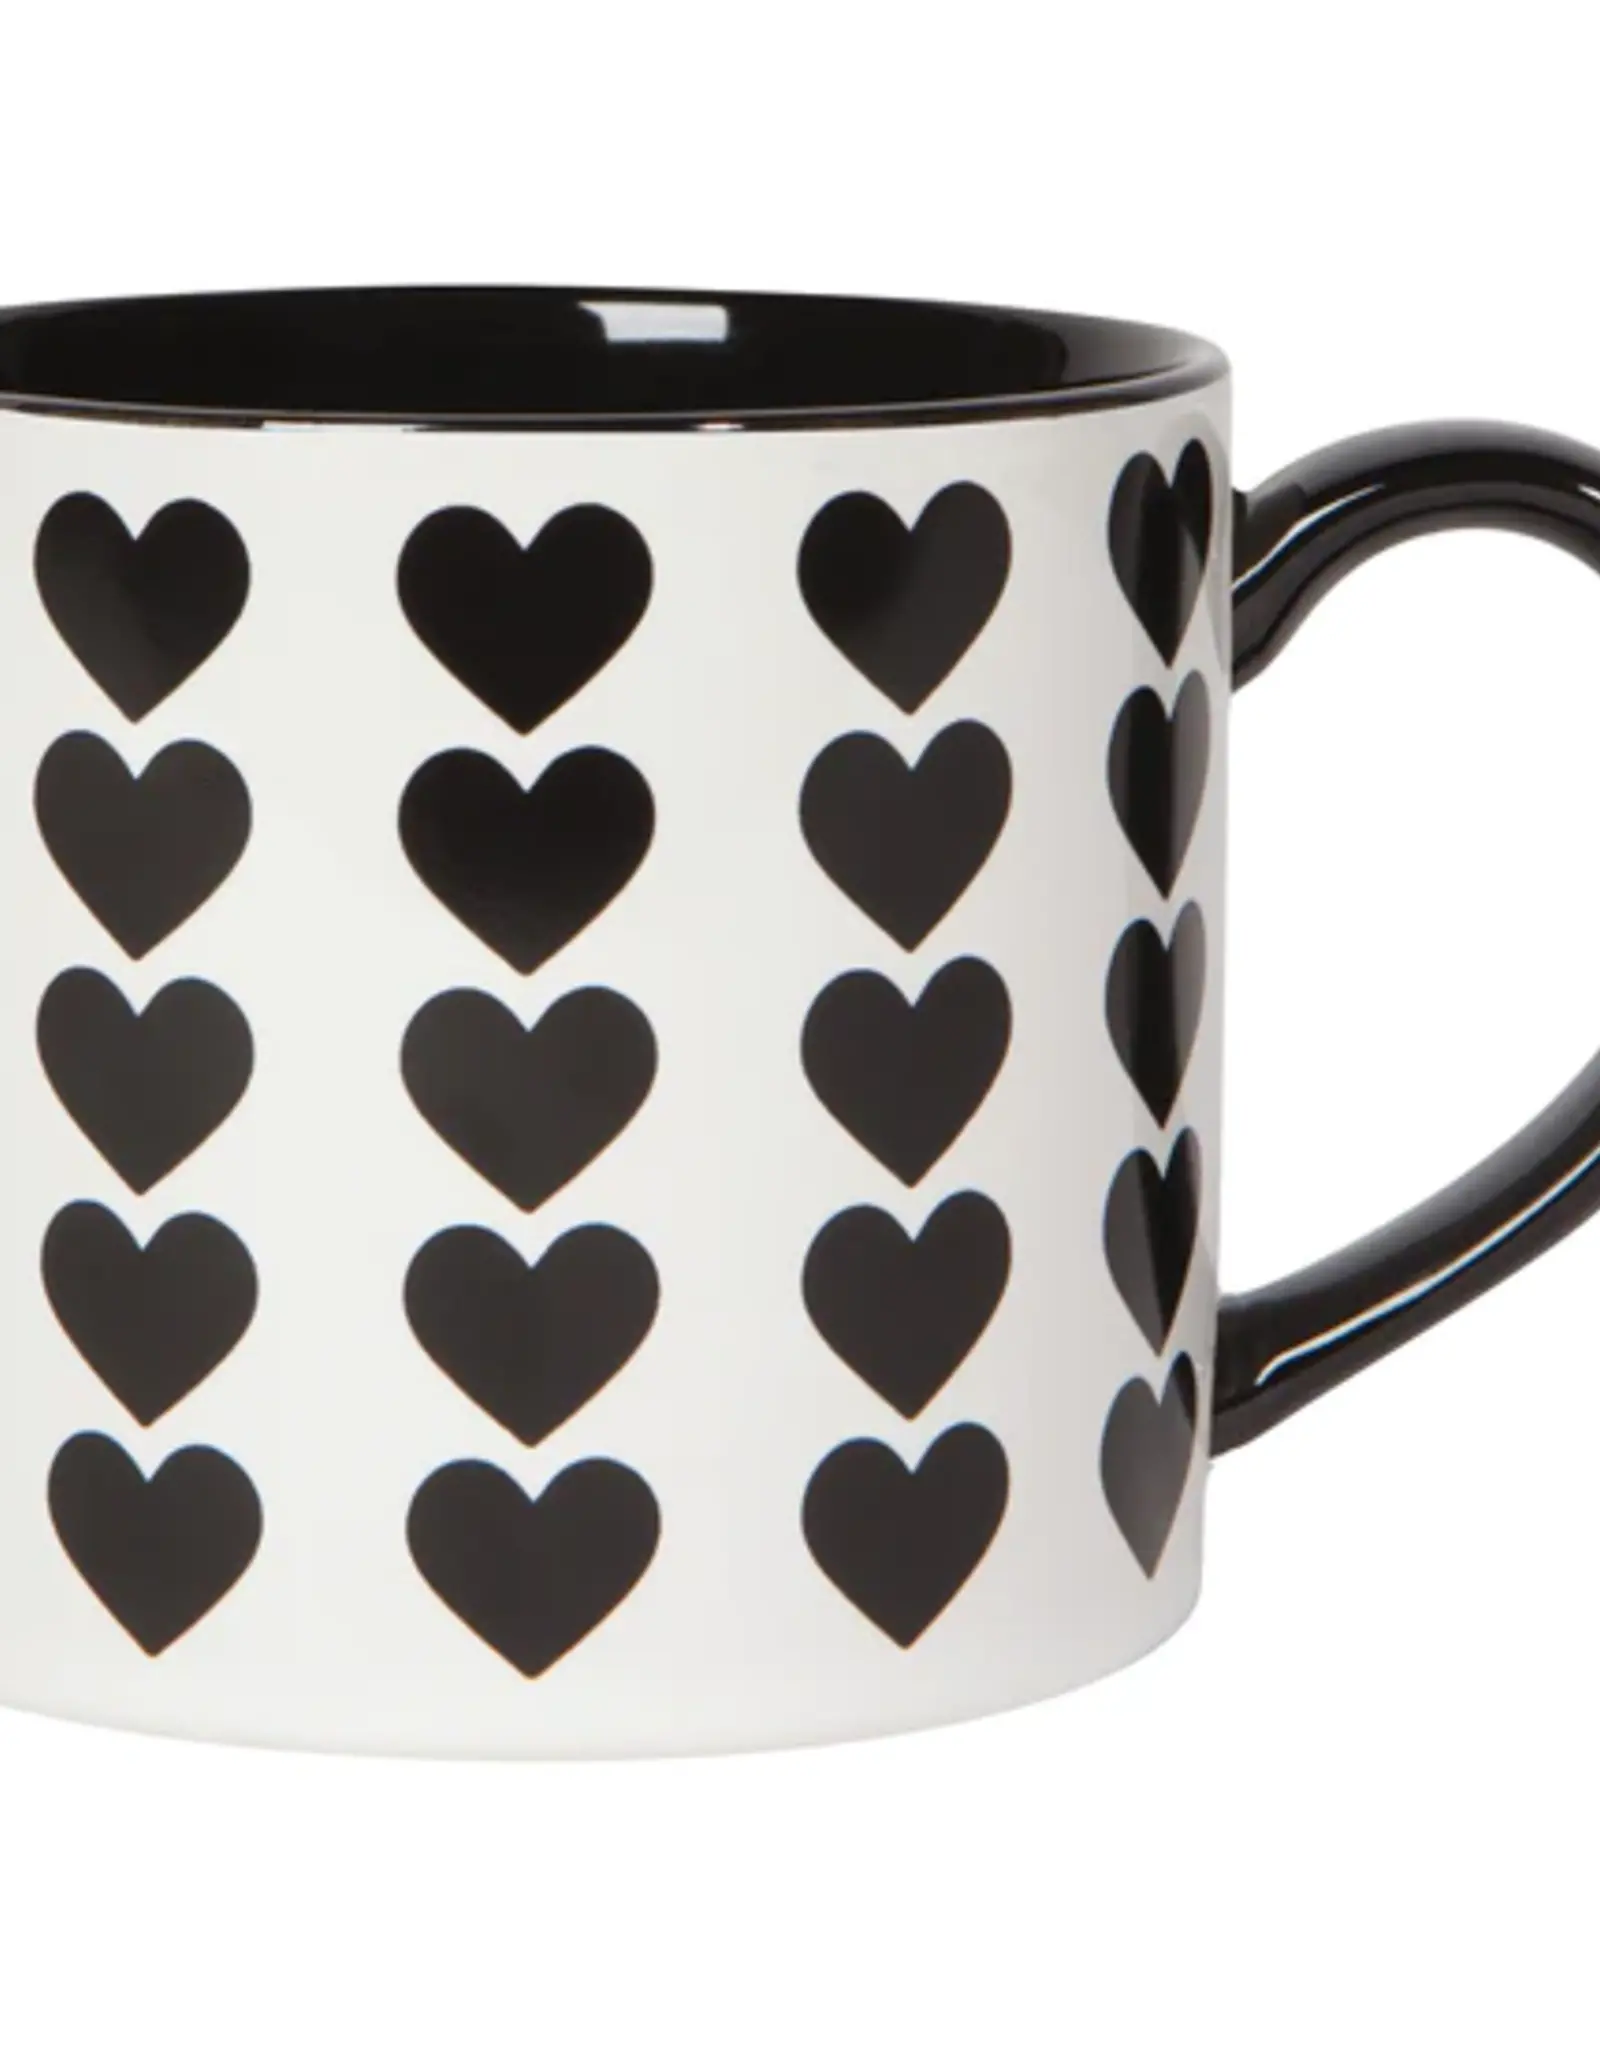 Danica + Now Designs Mug - Black Hearts (boxed)